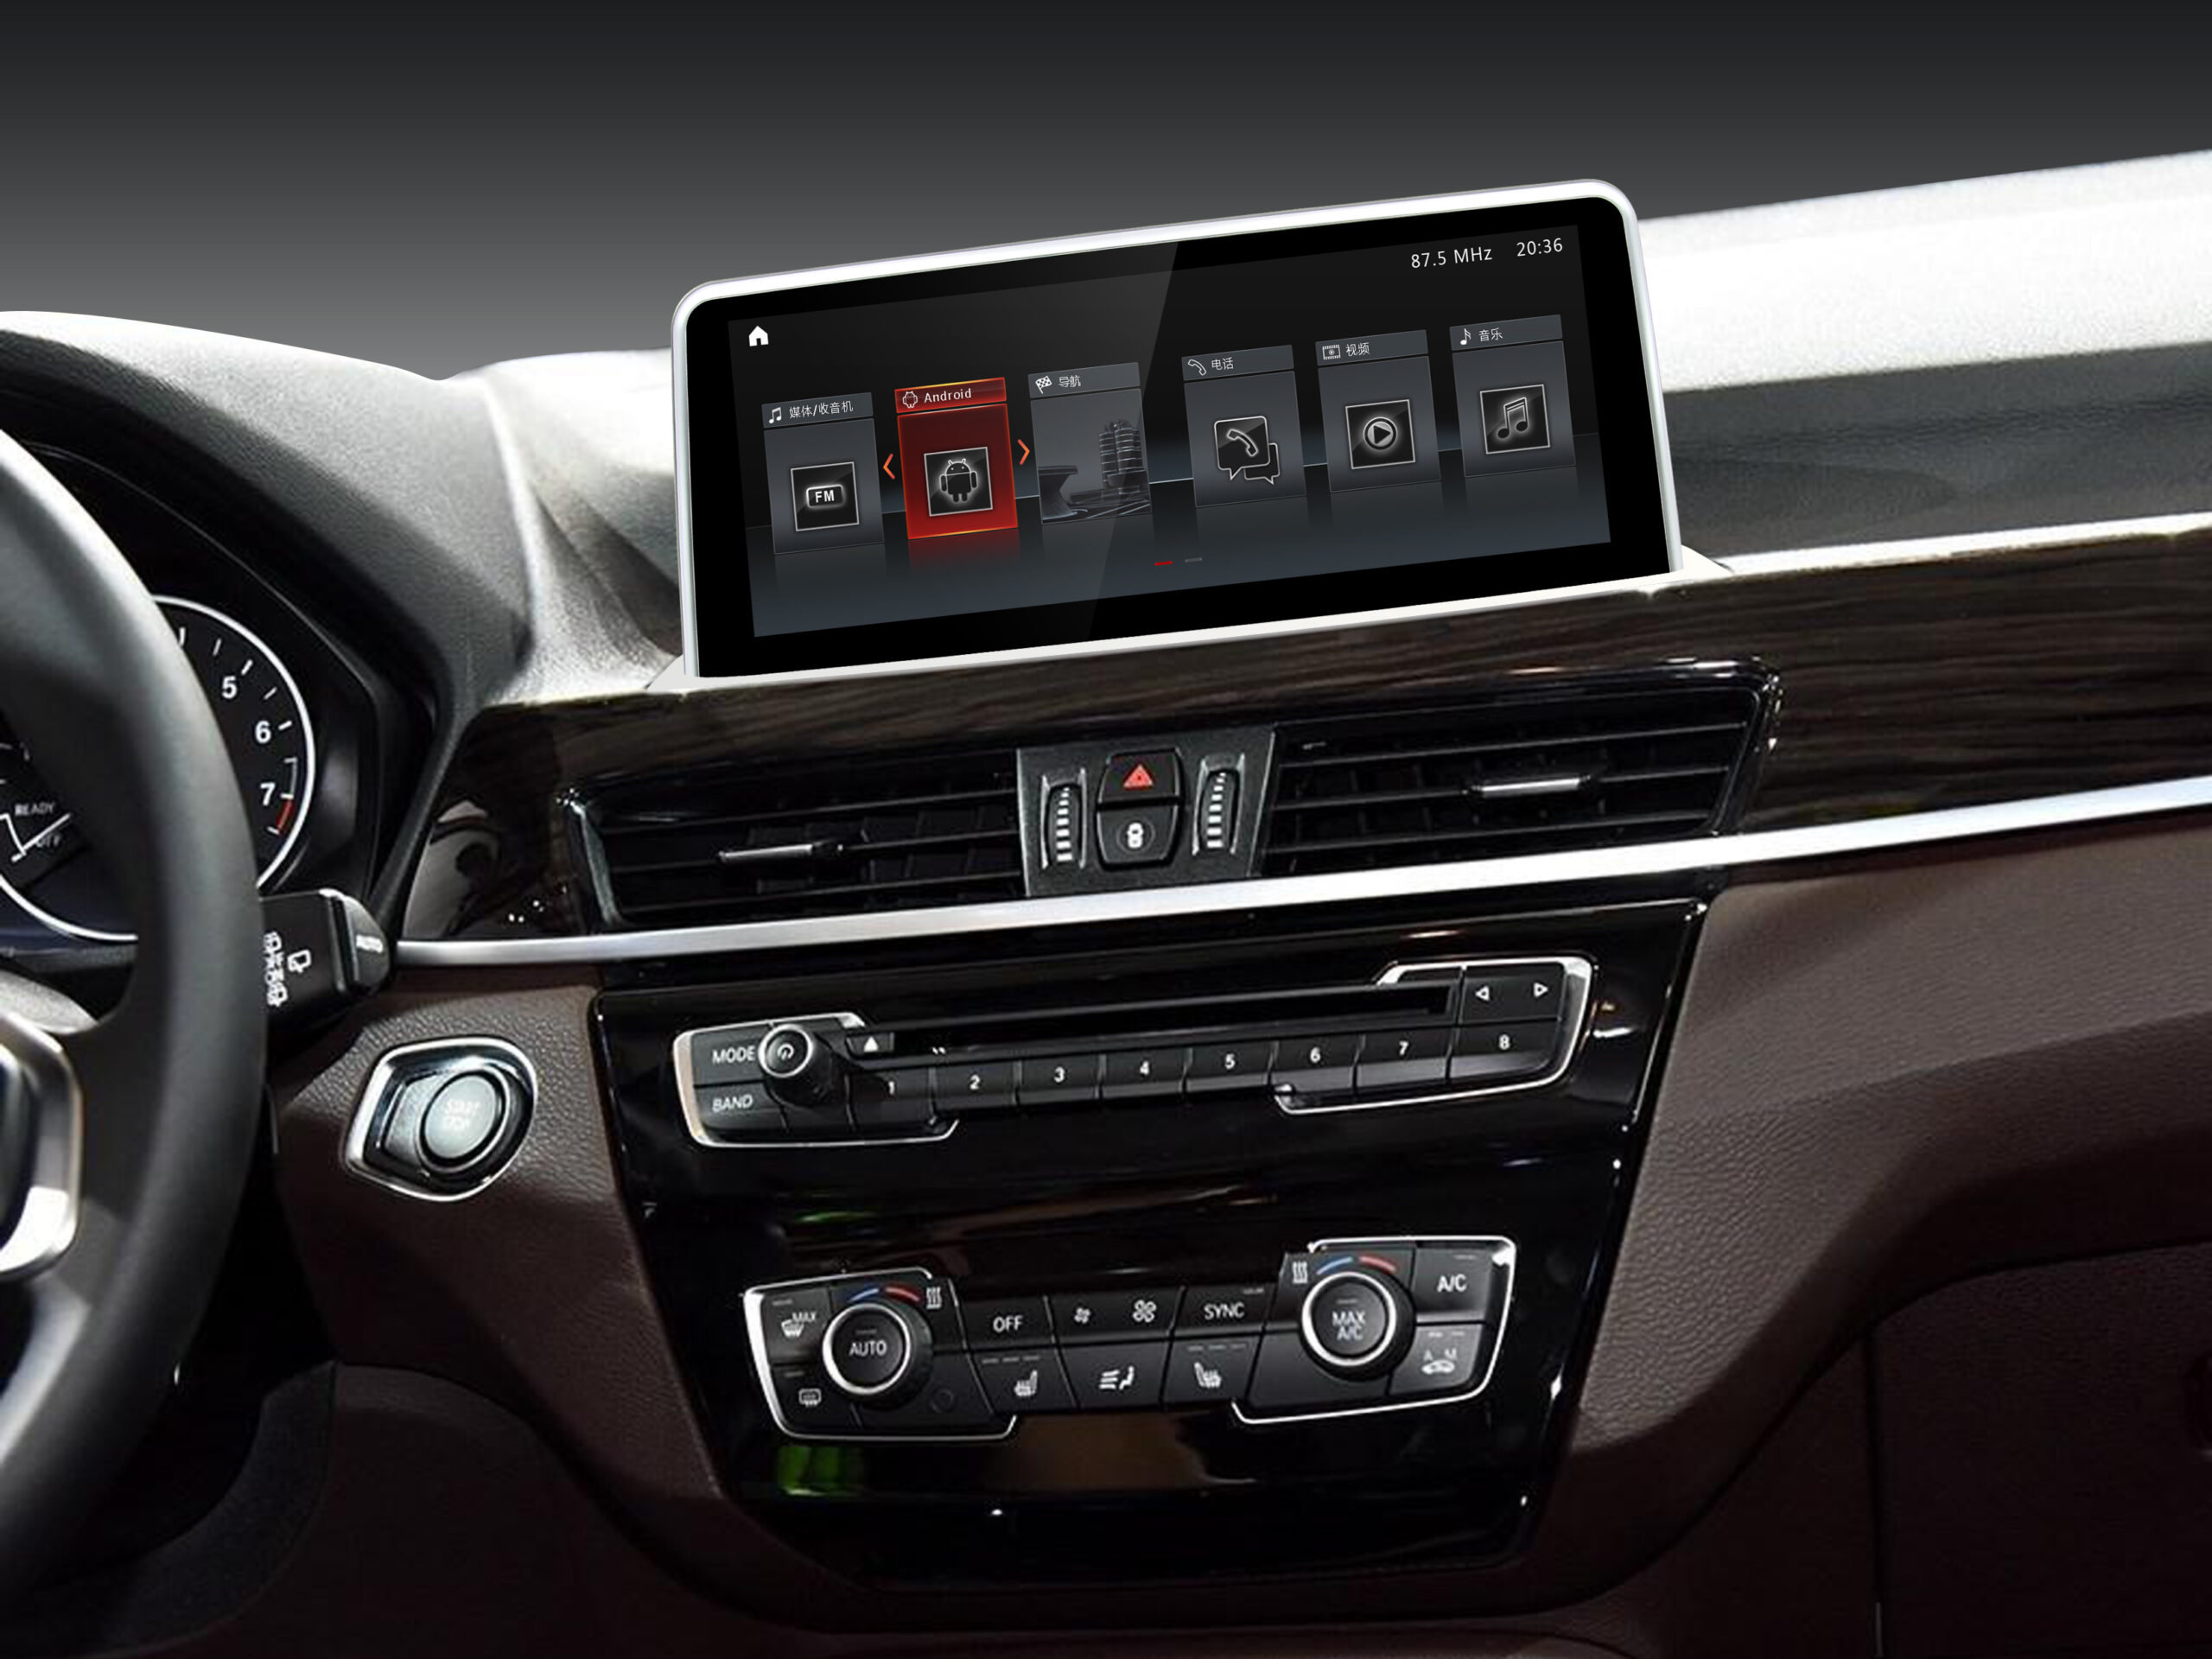 KD-1272-B Original Car Navigation audio for BMW X1 Series NBT